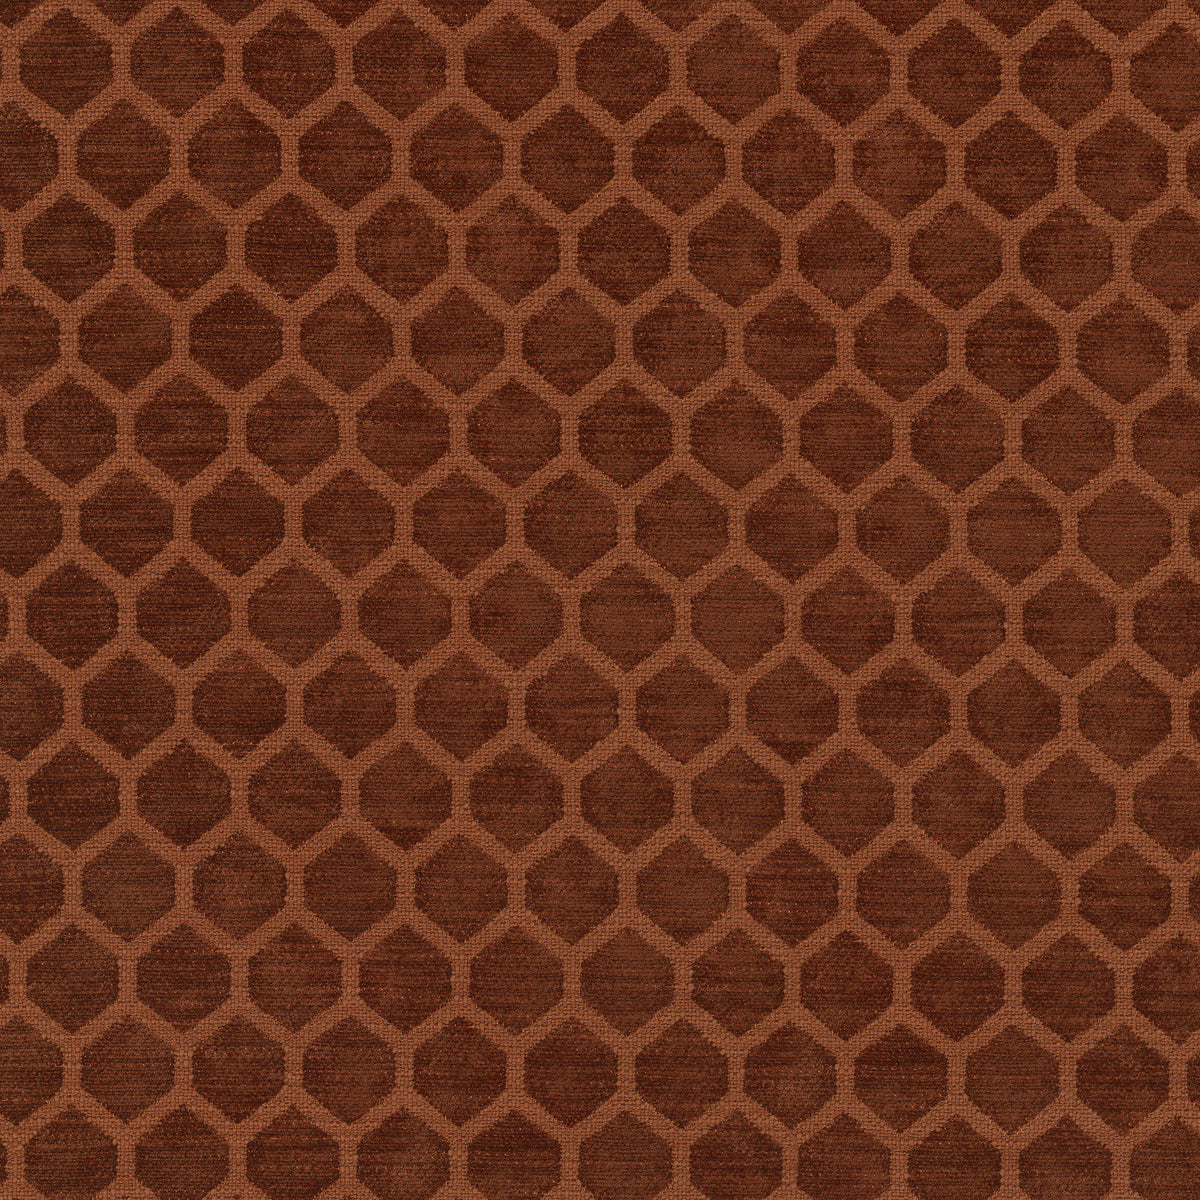 P/K Lifestyles Performance Honeycomb - Cinnabar 411370 Upholstery Fabric